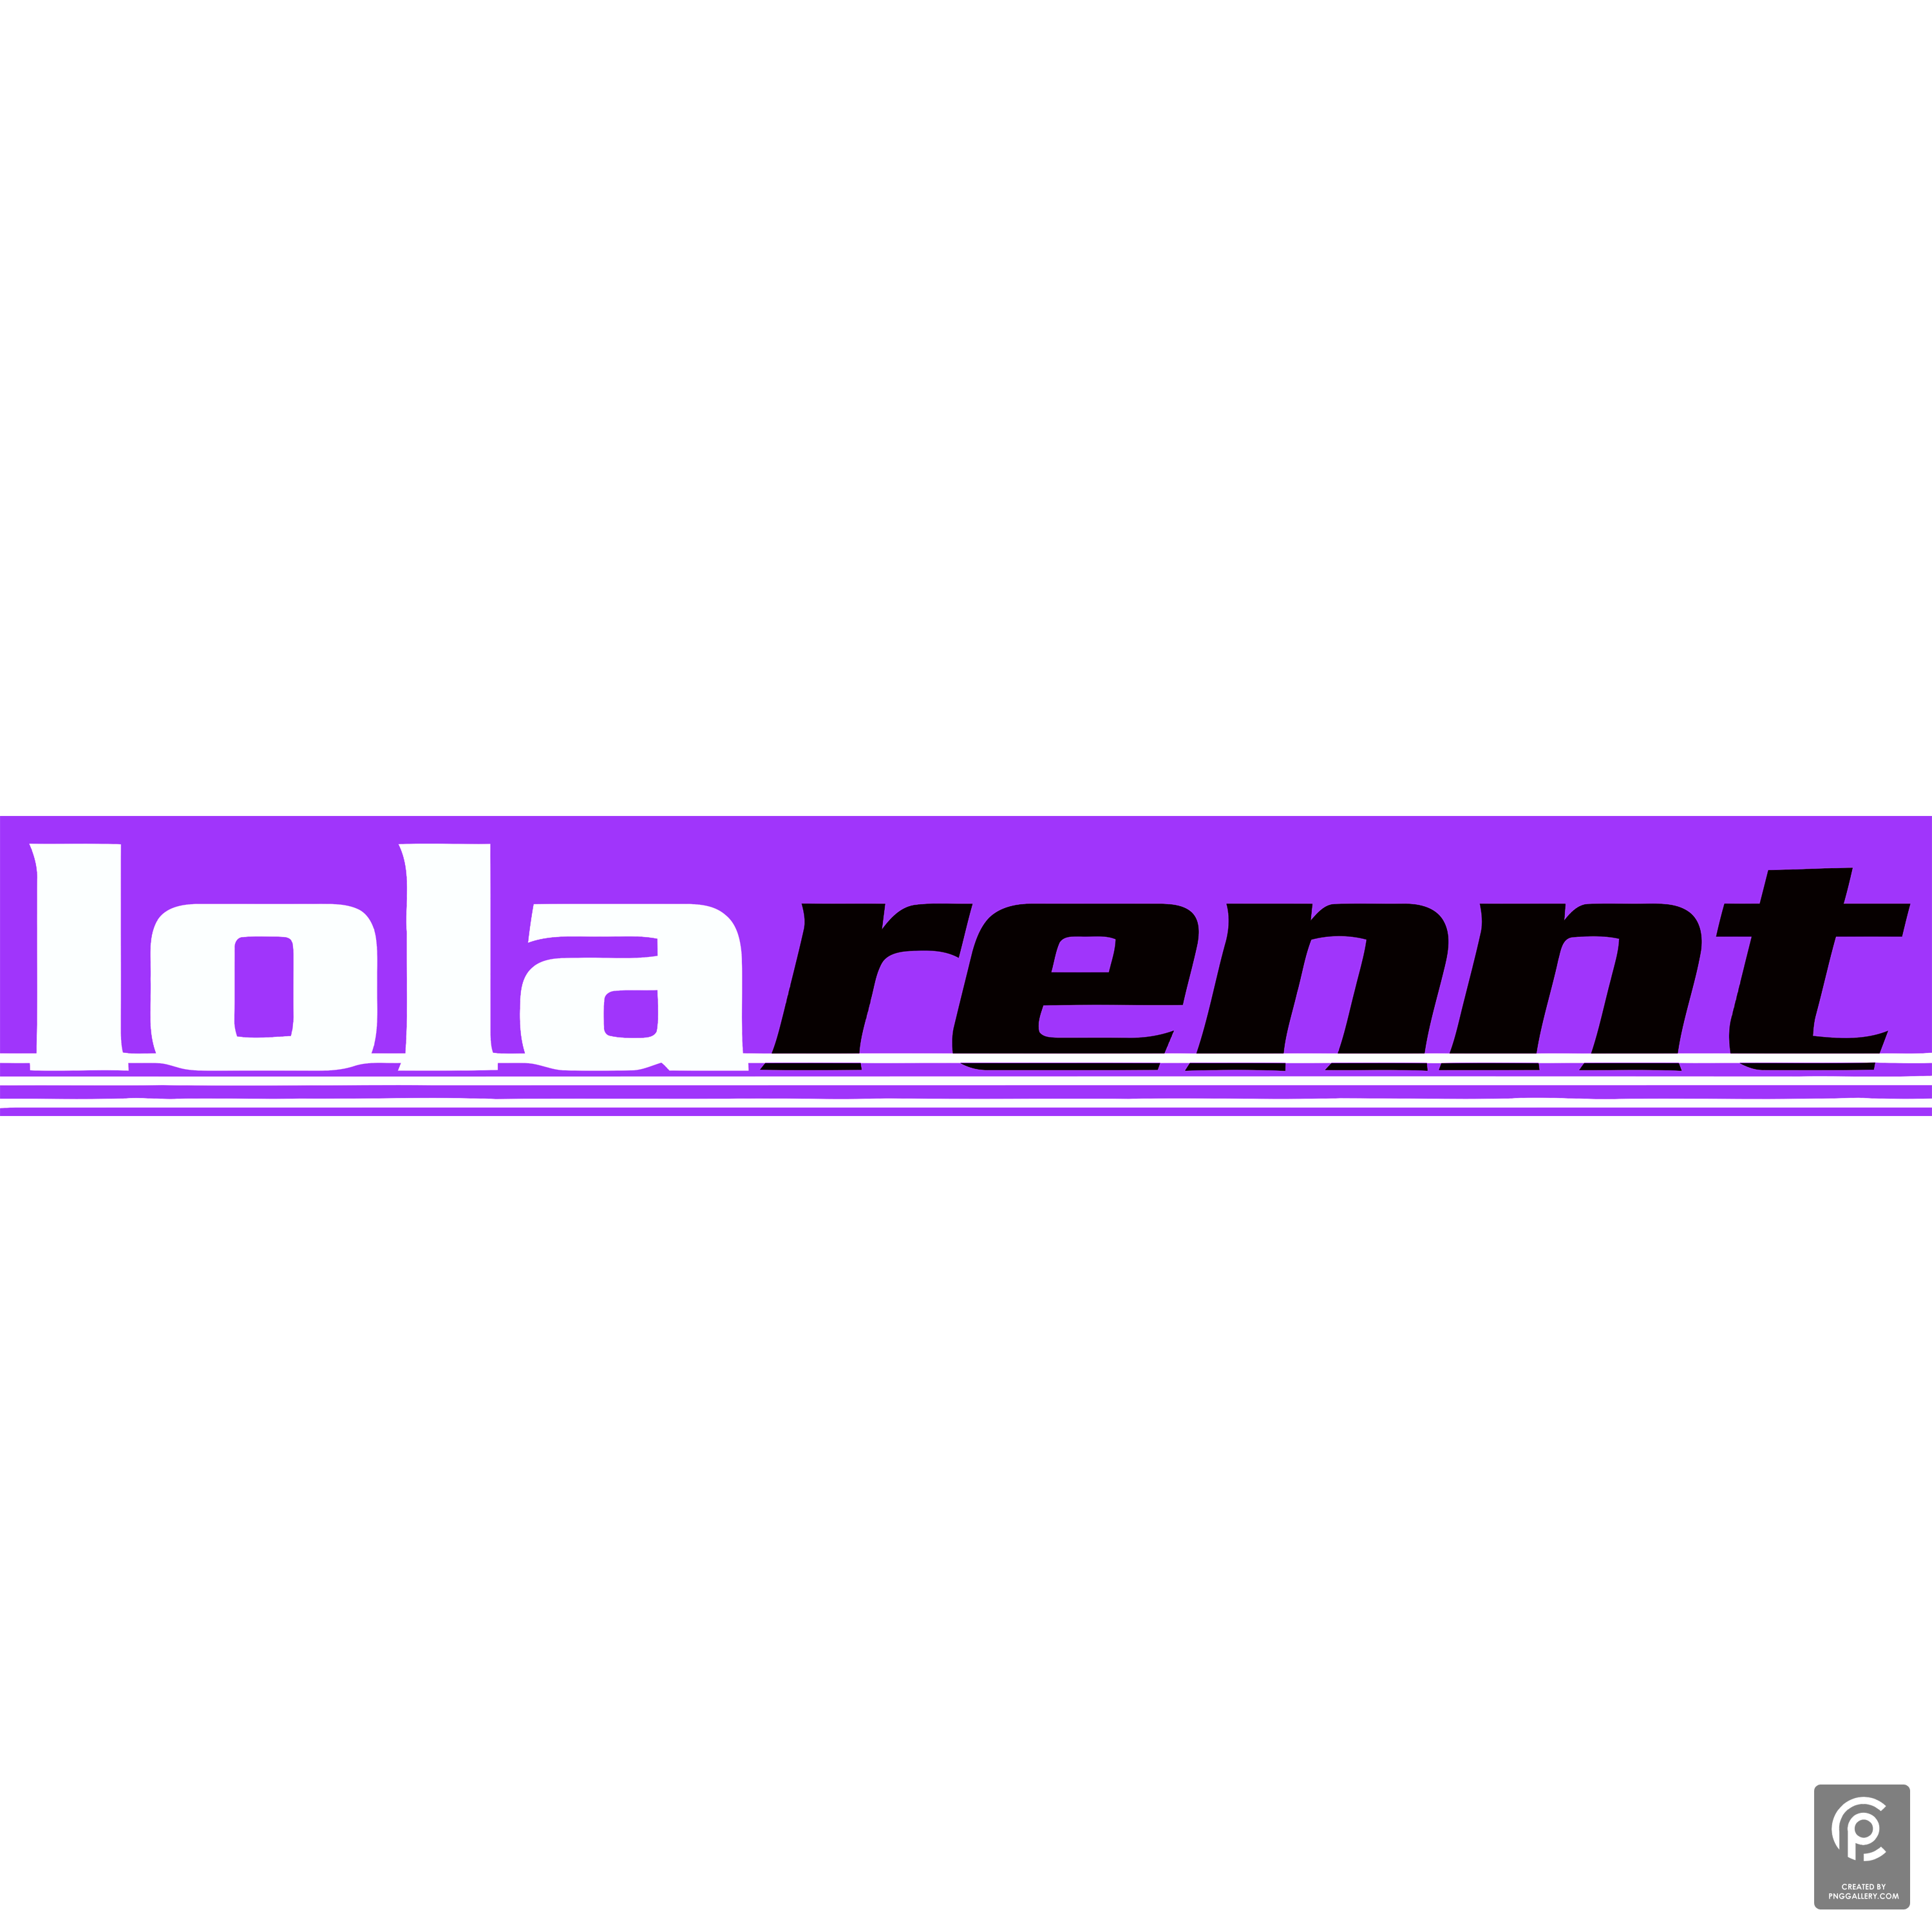 Lola Rennt Logo Transparent Gallery